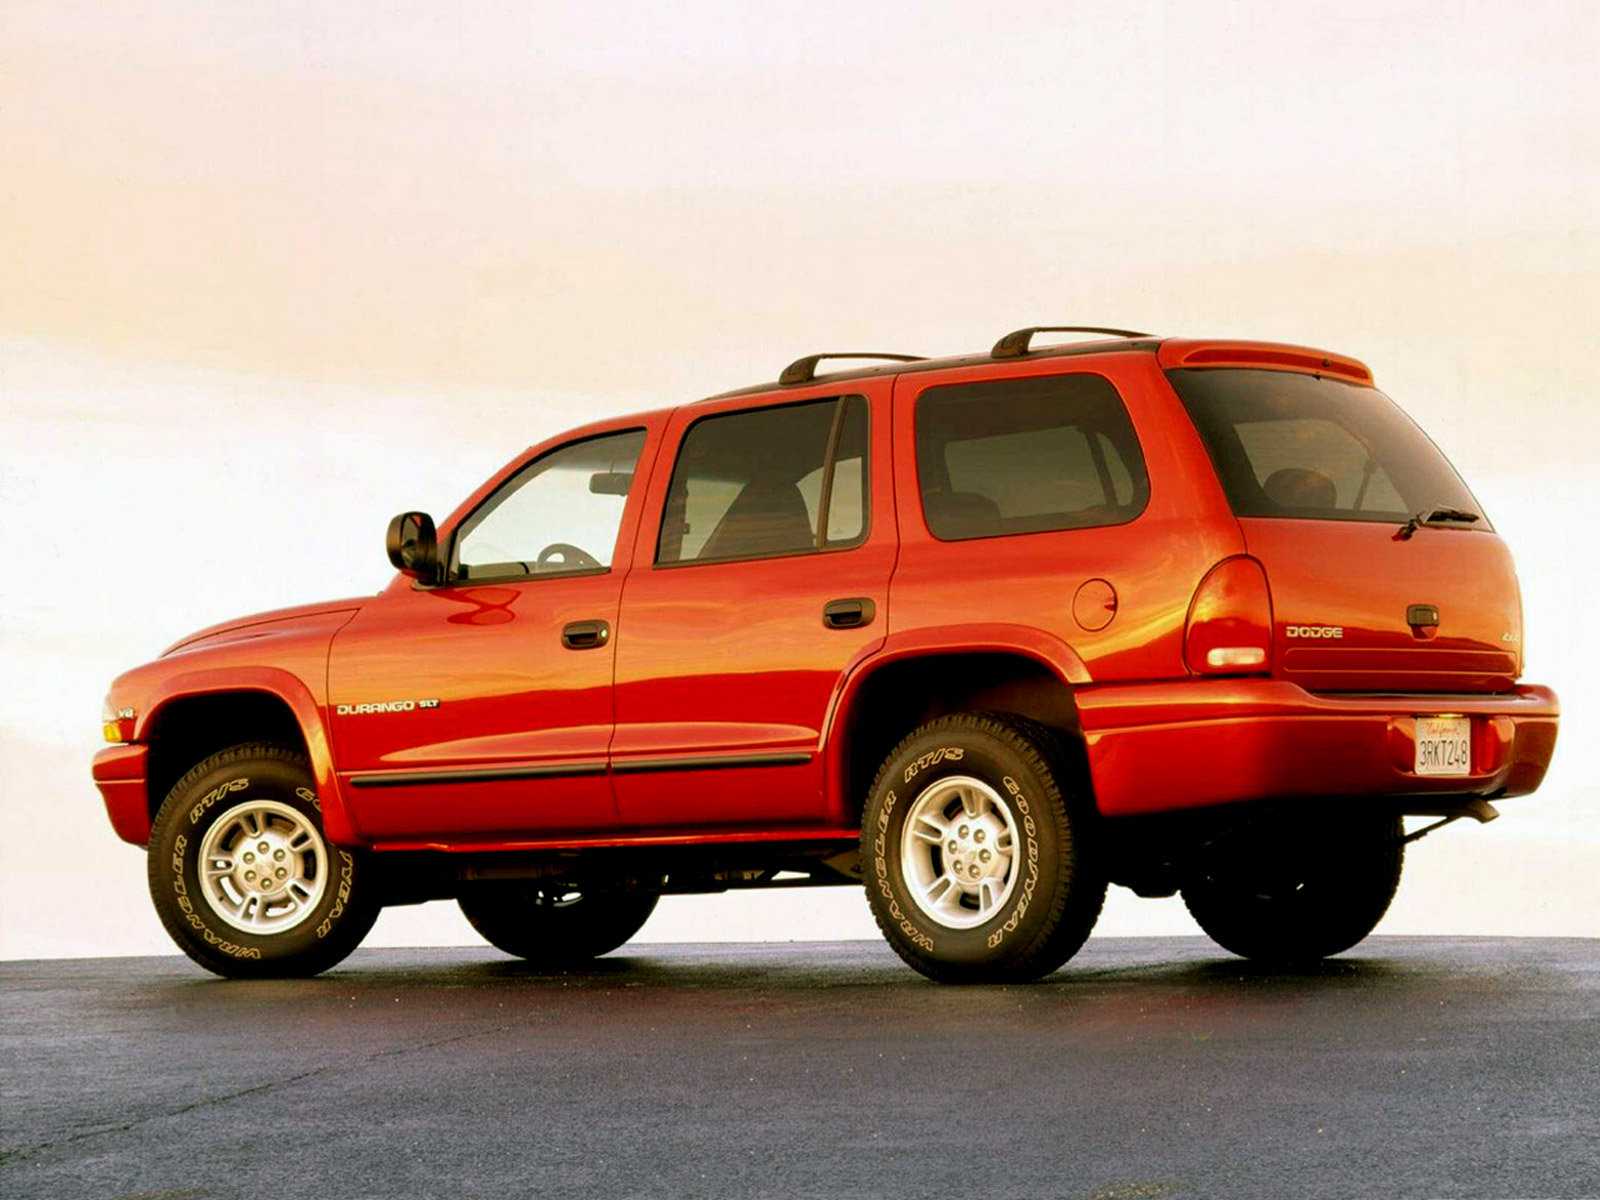 Dodge durango (додж дуранго) - продажа, цены, отзывы, фото: 11 объявлений